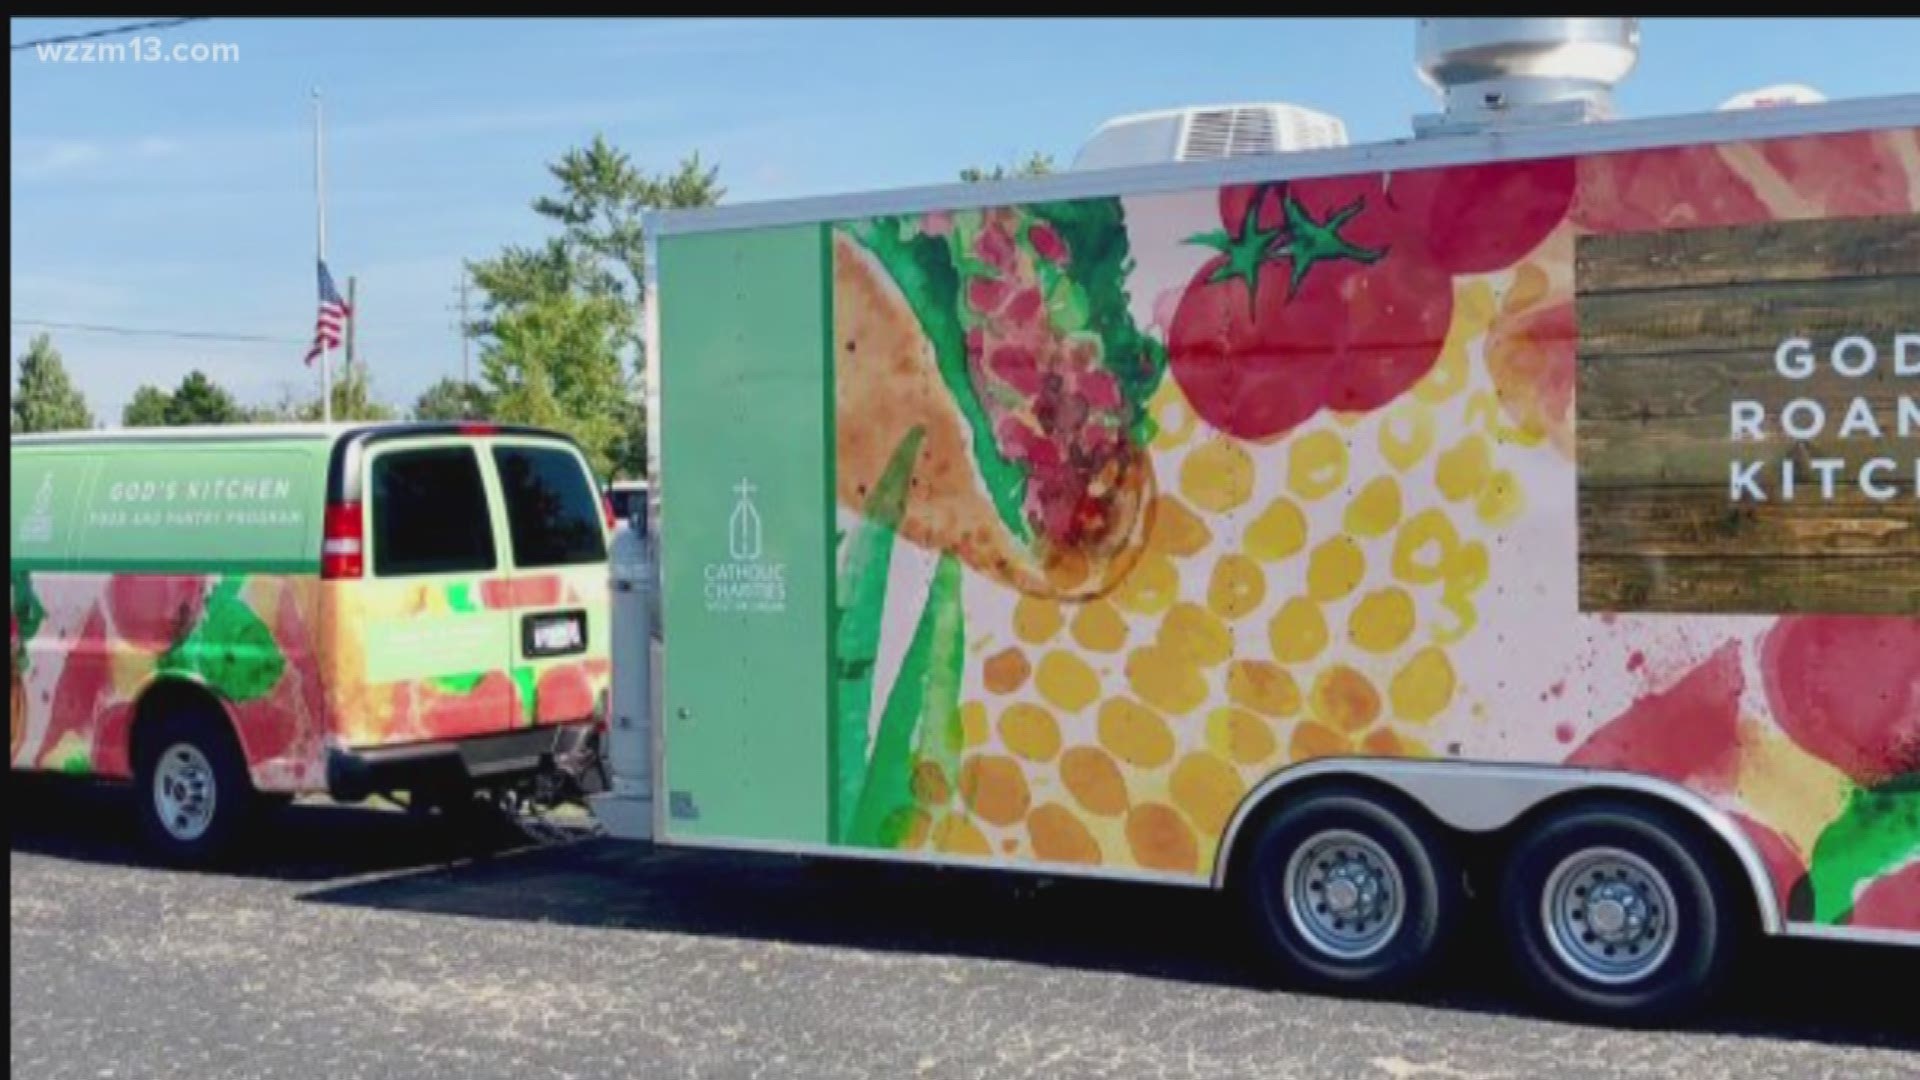 God's Kitchen debuts new food truck